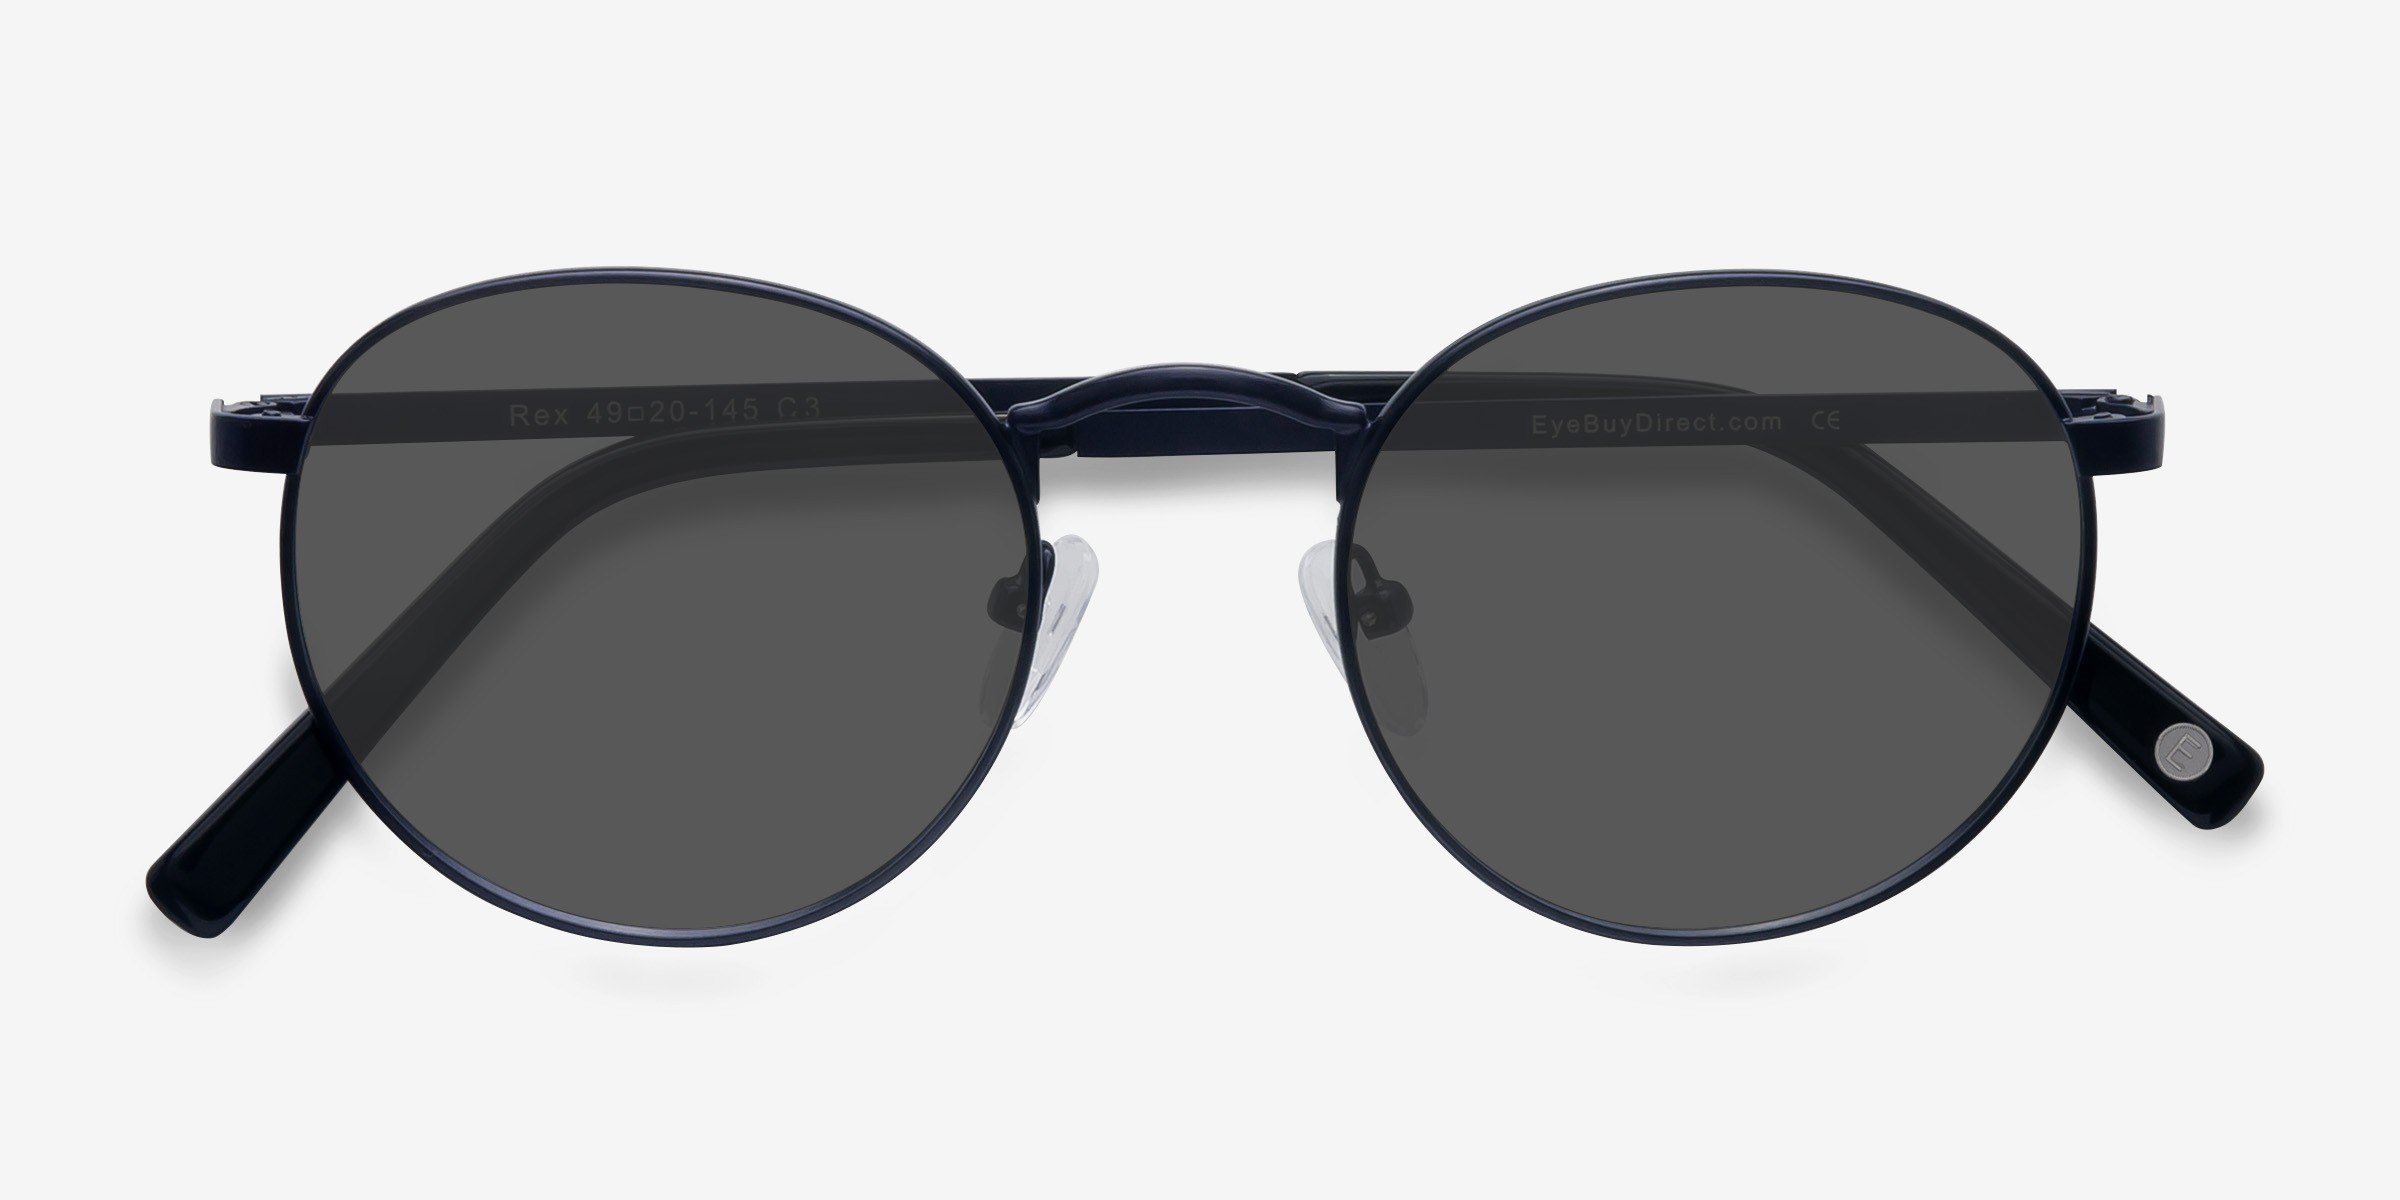 Polarized Sunglasses Online - A2952S - octa-lifestyle